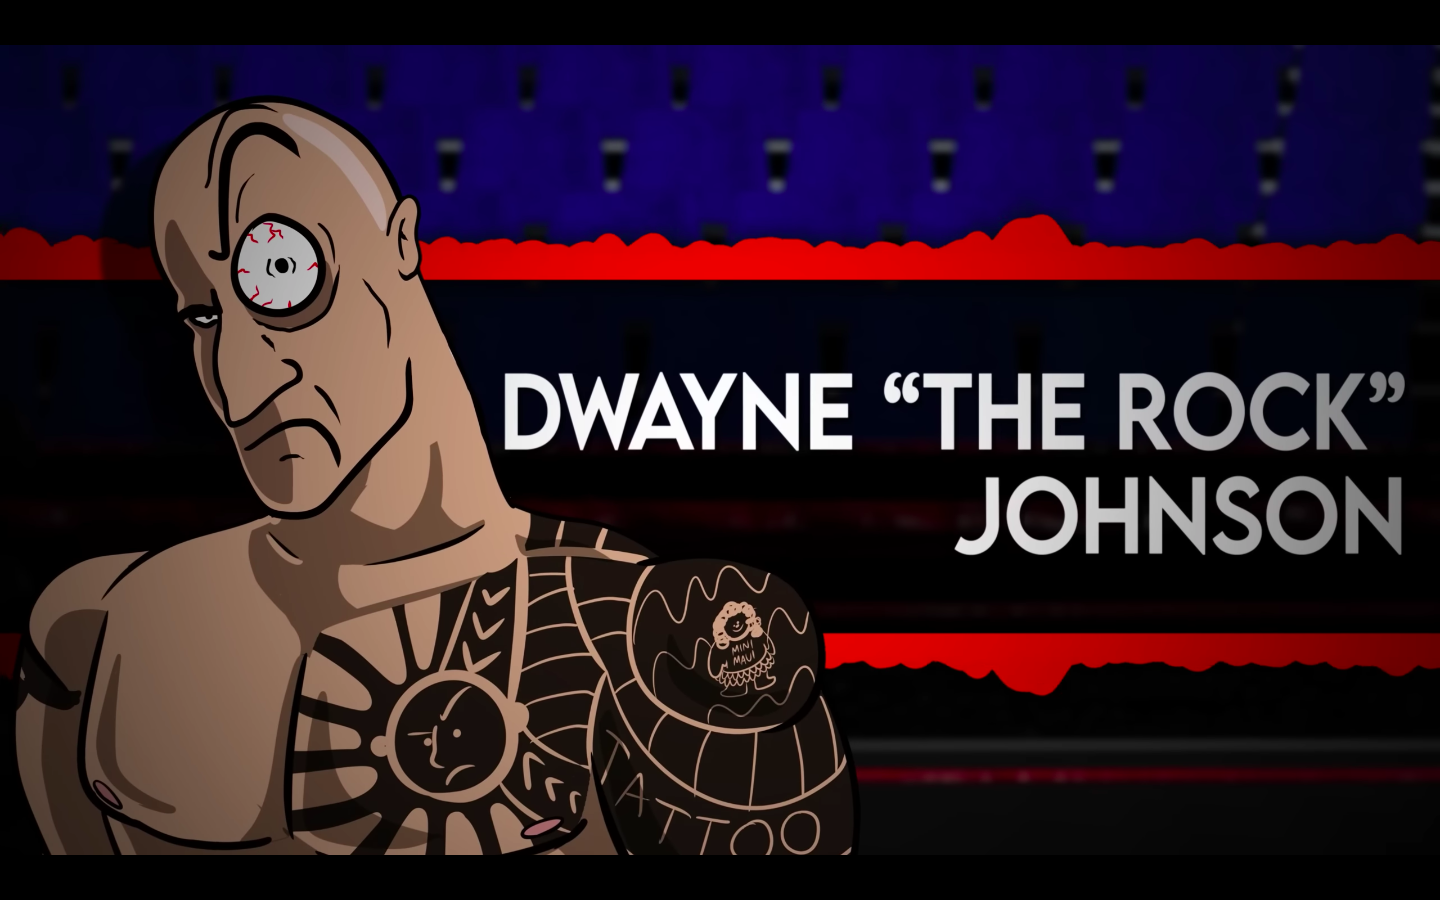 Dwayne The Rock Johnson eyebrow raise meme | Poster